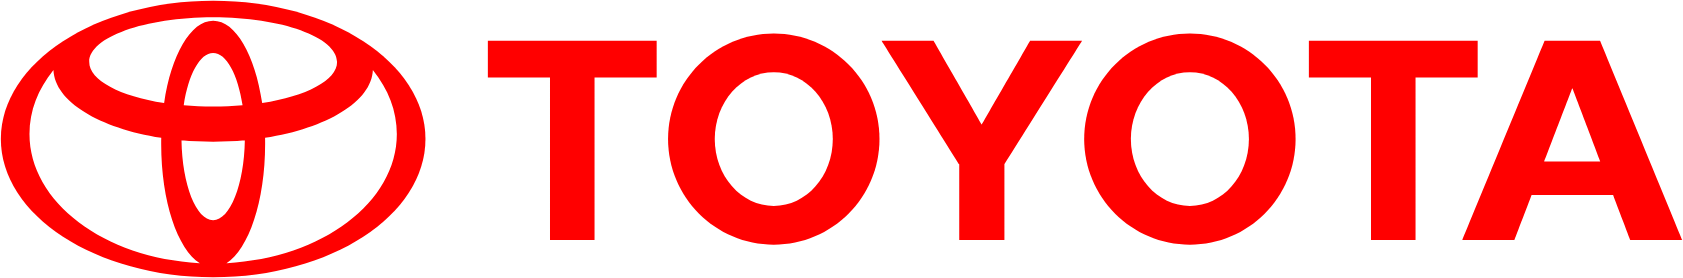 Toyota logo large (transparent PNG)